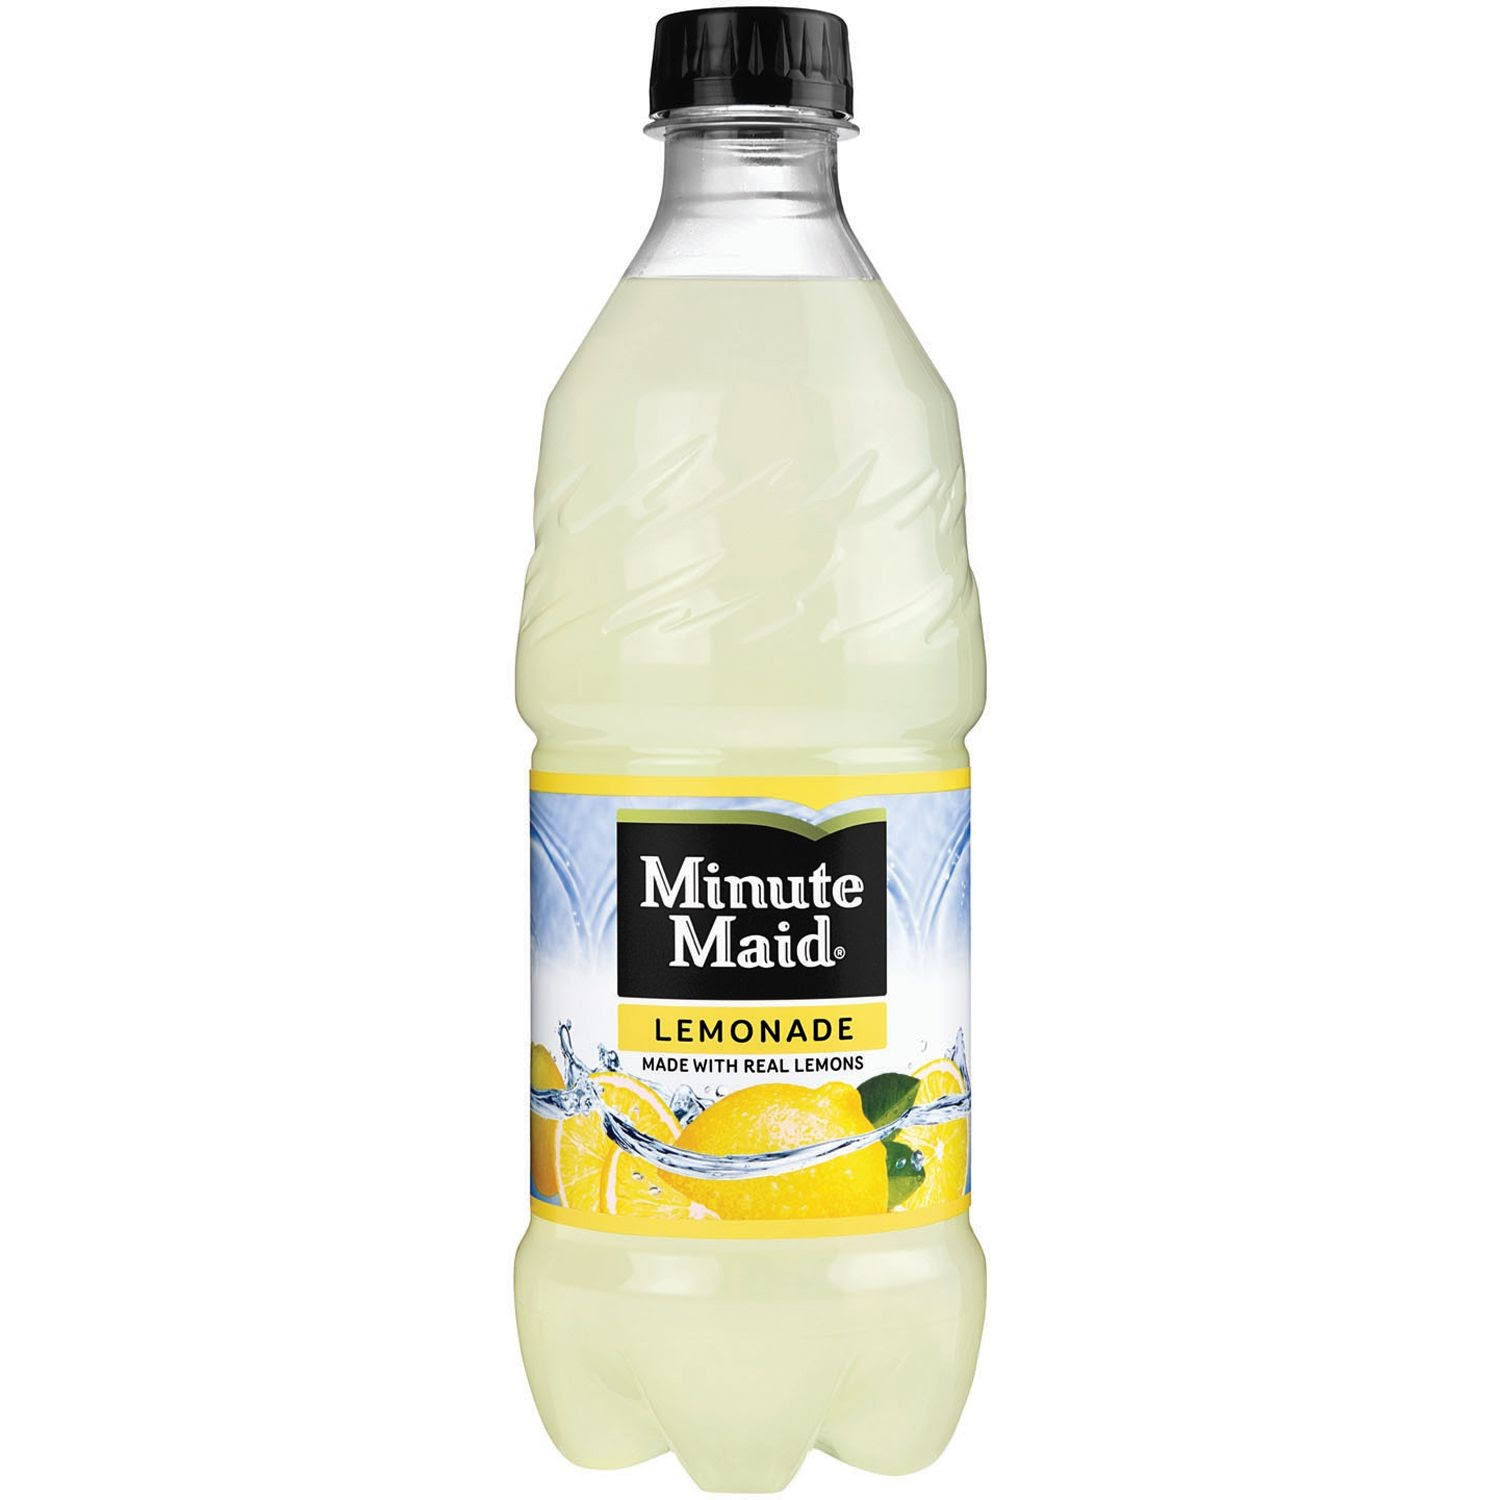 Minute Maid Lemonade - 1 bottle